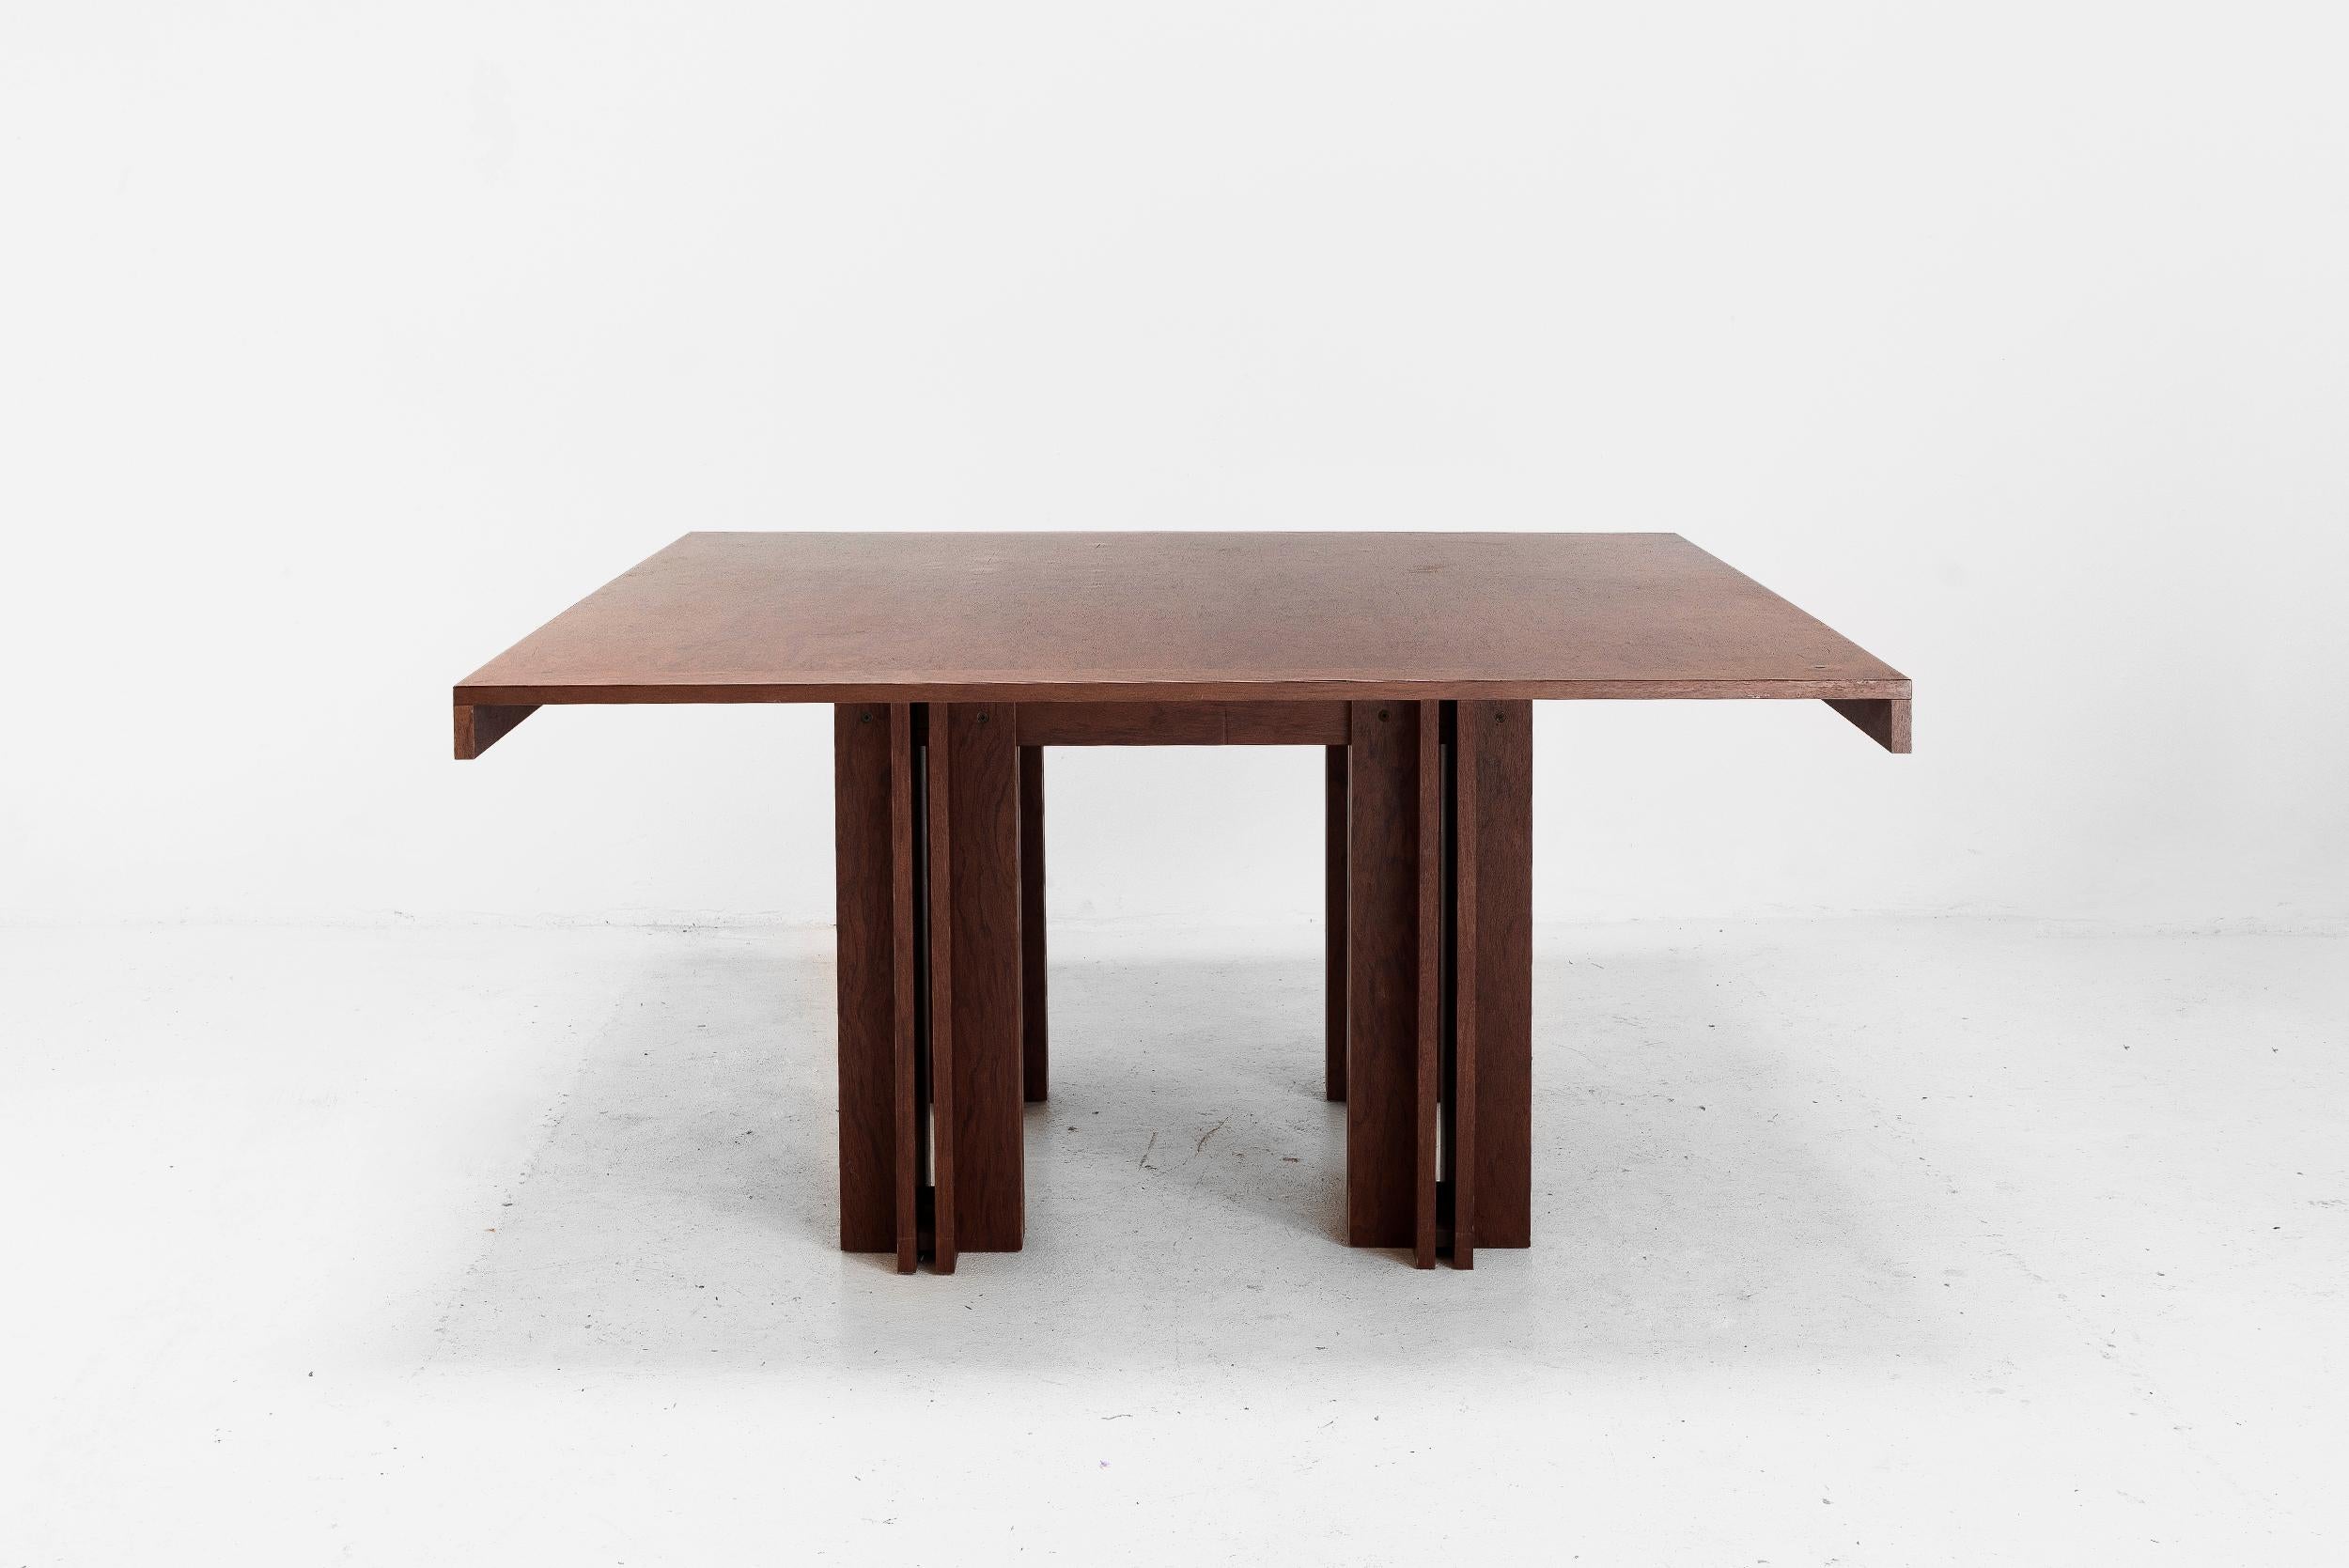 Carlo Scarpa
Dining table model “Quatour”
Manufactured by Simon Gavina
Italy, 1974
Walnut wood

Measurements:
141 cm x 141 cm x 72 H cm
55.9 in x 55.9 in x 28 H in.

Literature:
Giuliana Gramigna, Repertorio 1950/1980, Milan, 1985, p.